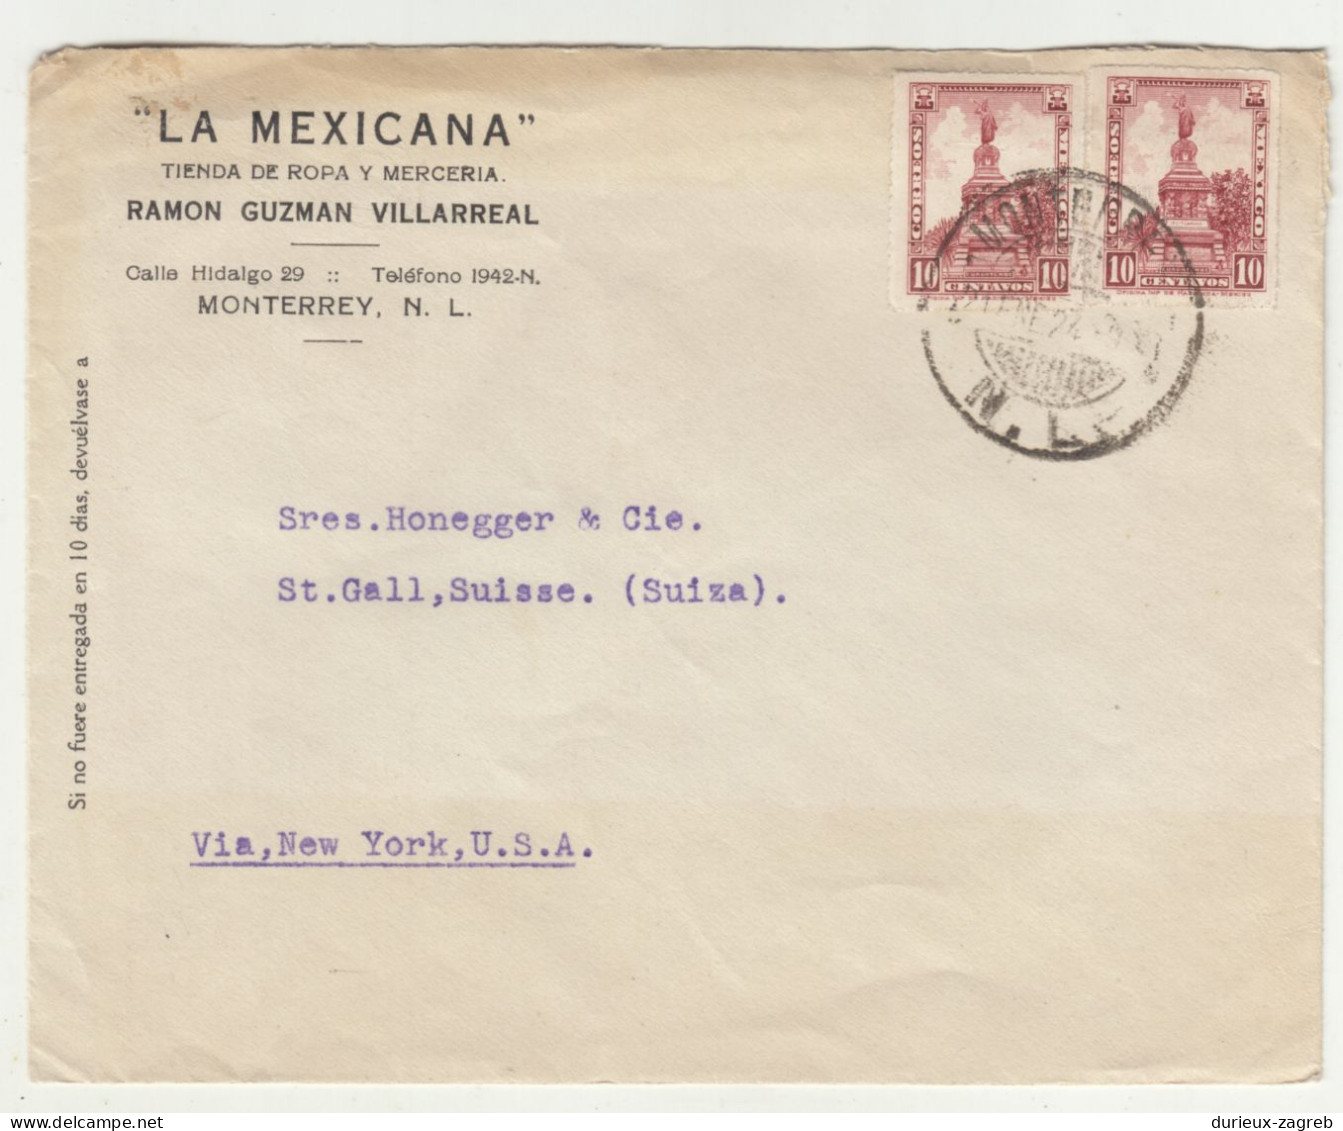 La Mexicana, Monterrey Company Letter Cover Posted 1924 B240503 - México